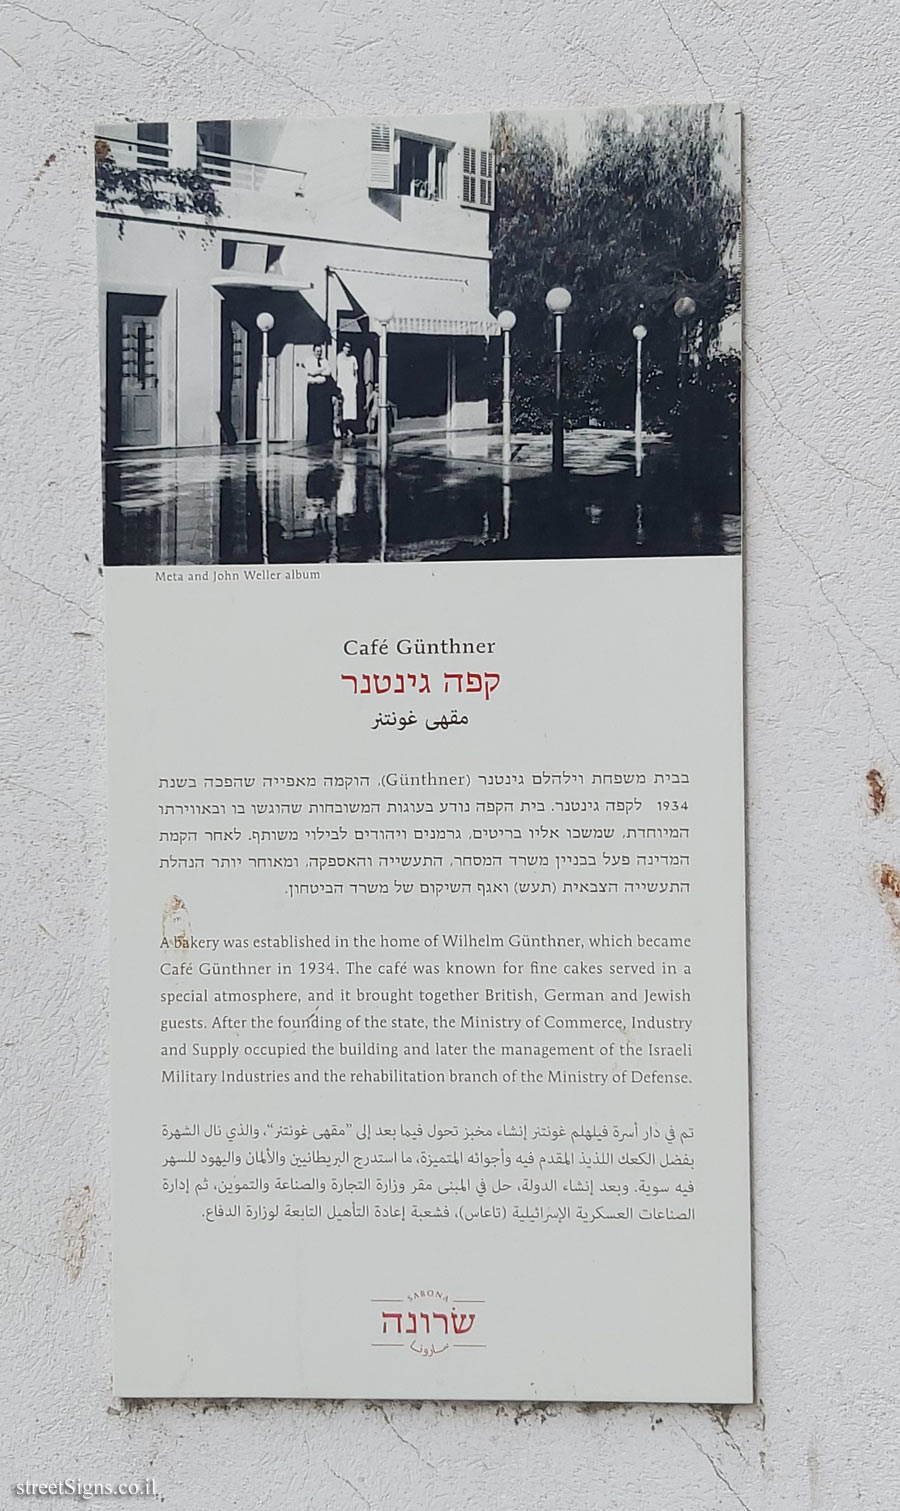 Tel Aviv - Sarona complex - buildings for preservation - Café Günthner